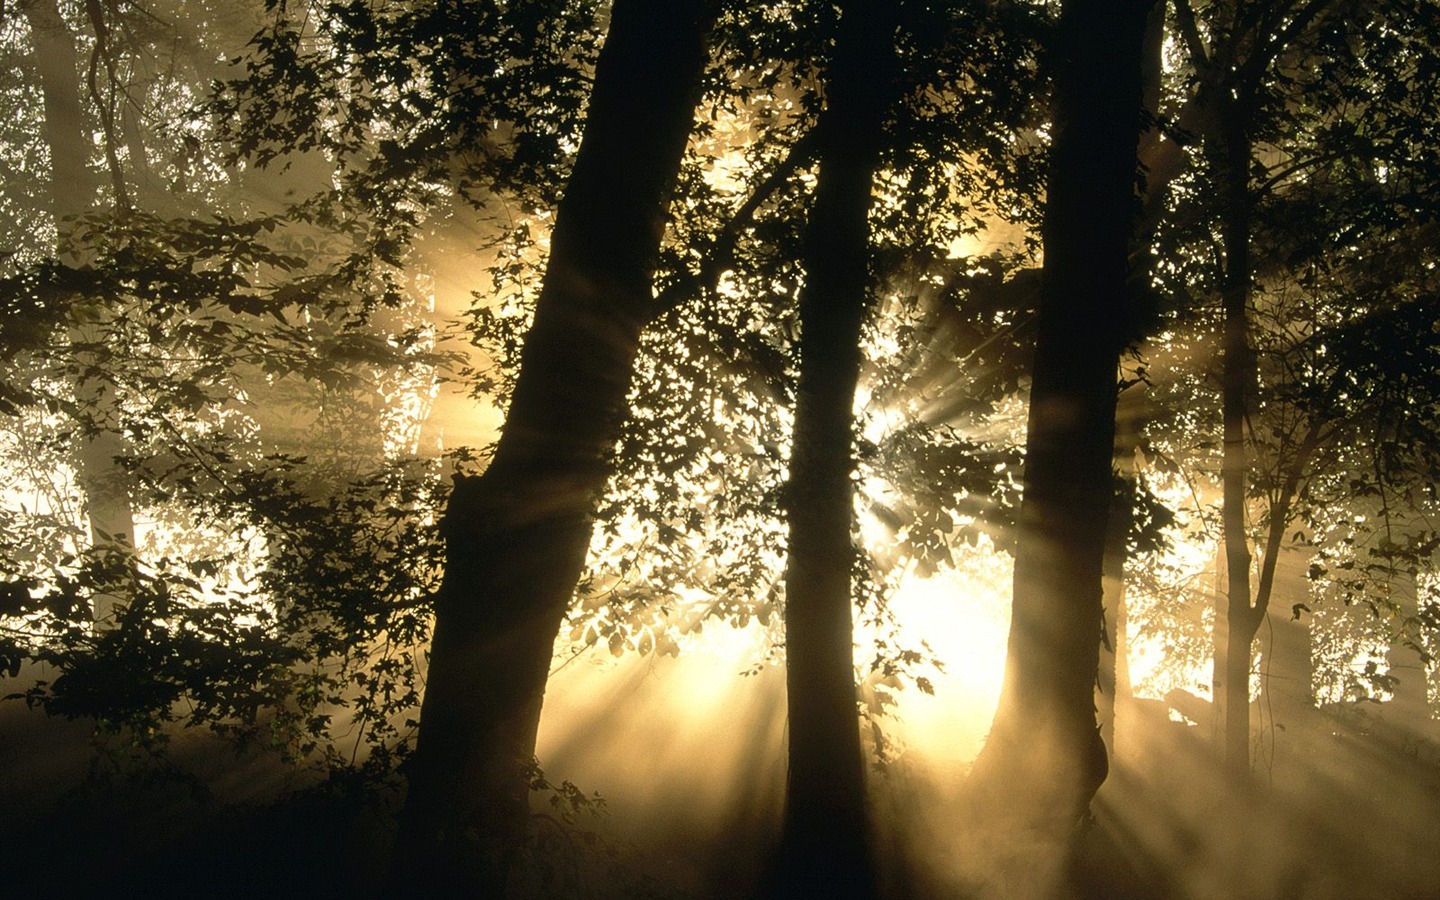 Papel tapiz de árboles forestales #13 - 1440x900